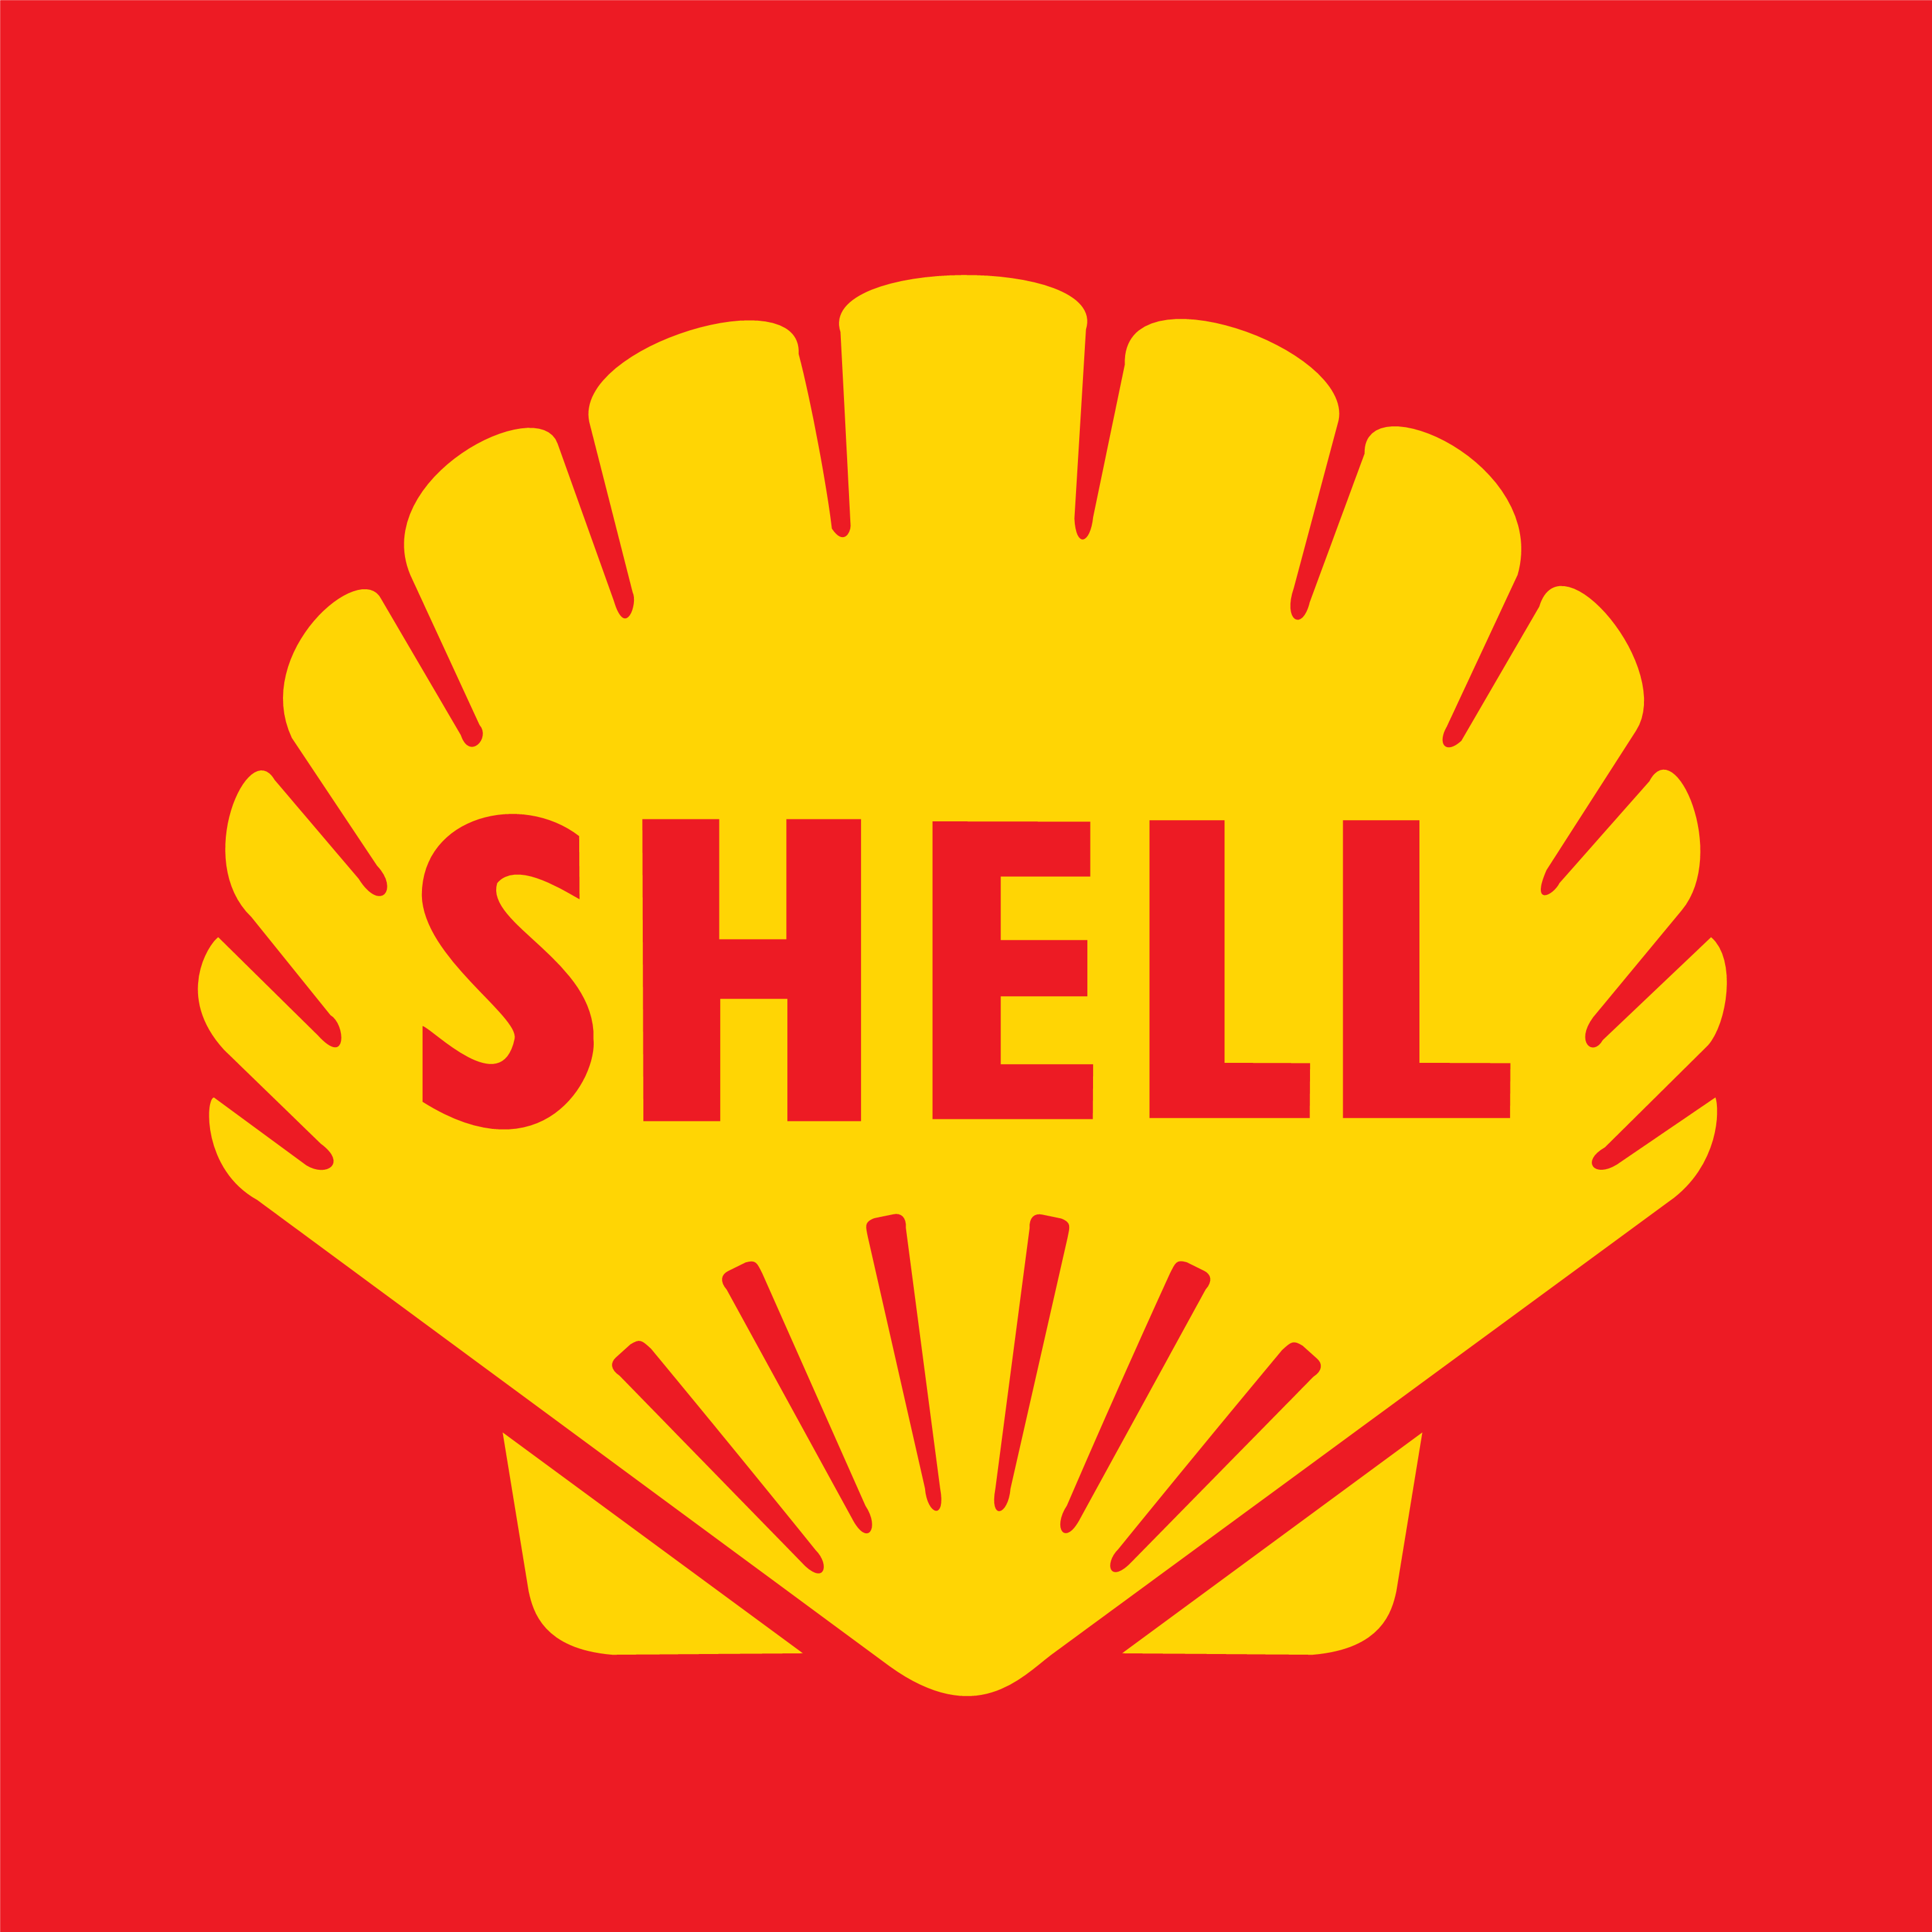 Shell Oil Company Logo - Shell: The evolution of a logo